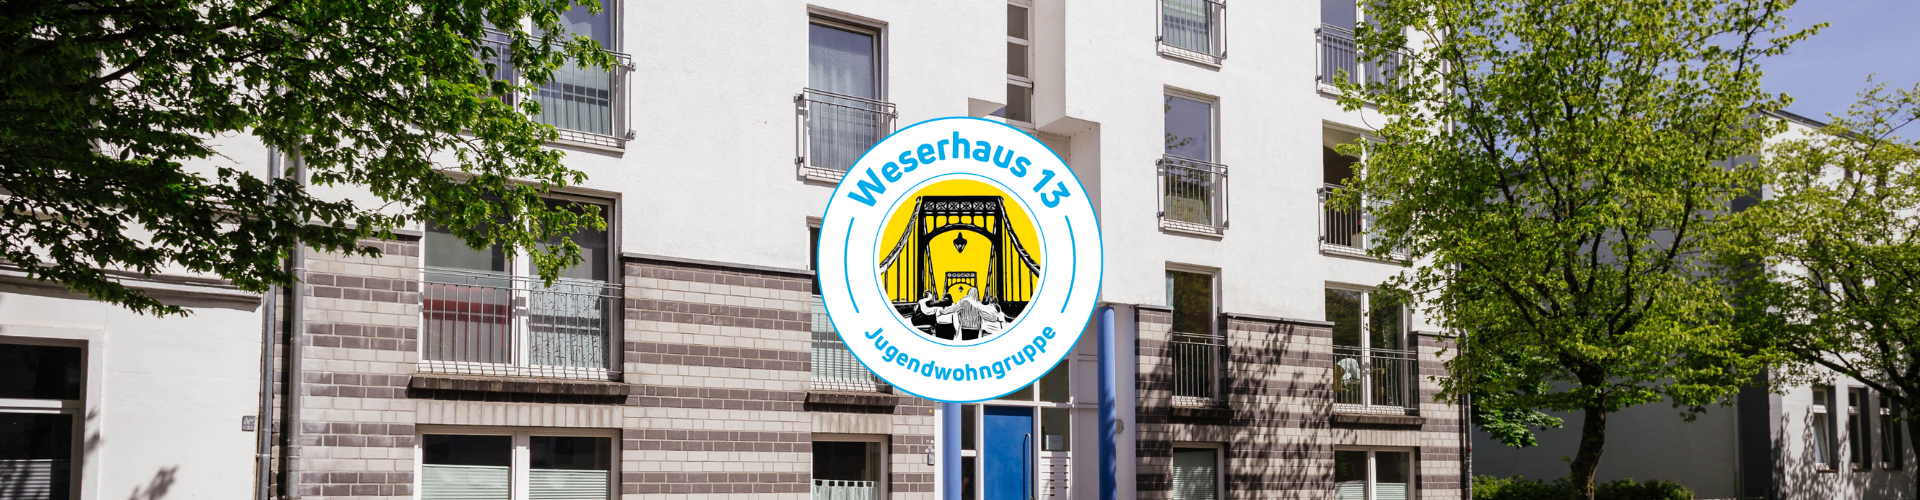 Titelbild Weserhaus 13 Jugendwohngruppe